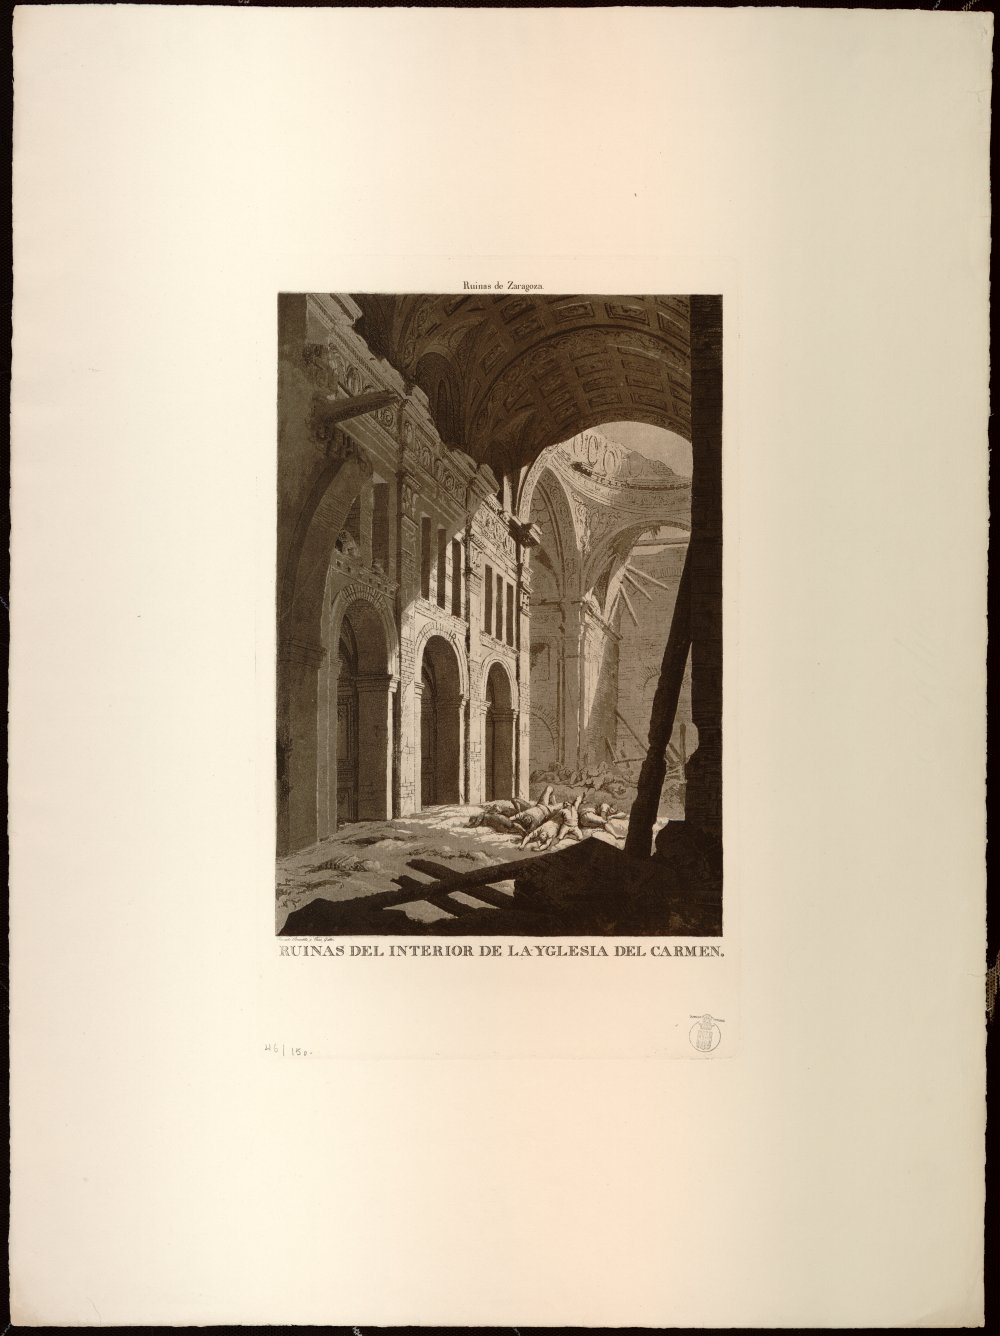 Ruinas del interior de la iglesia del Carmen